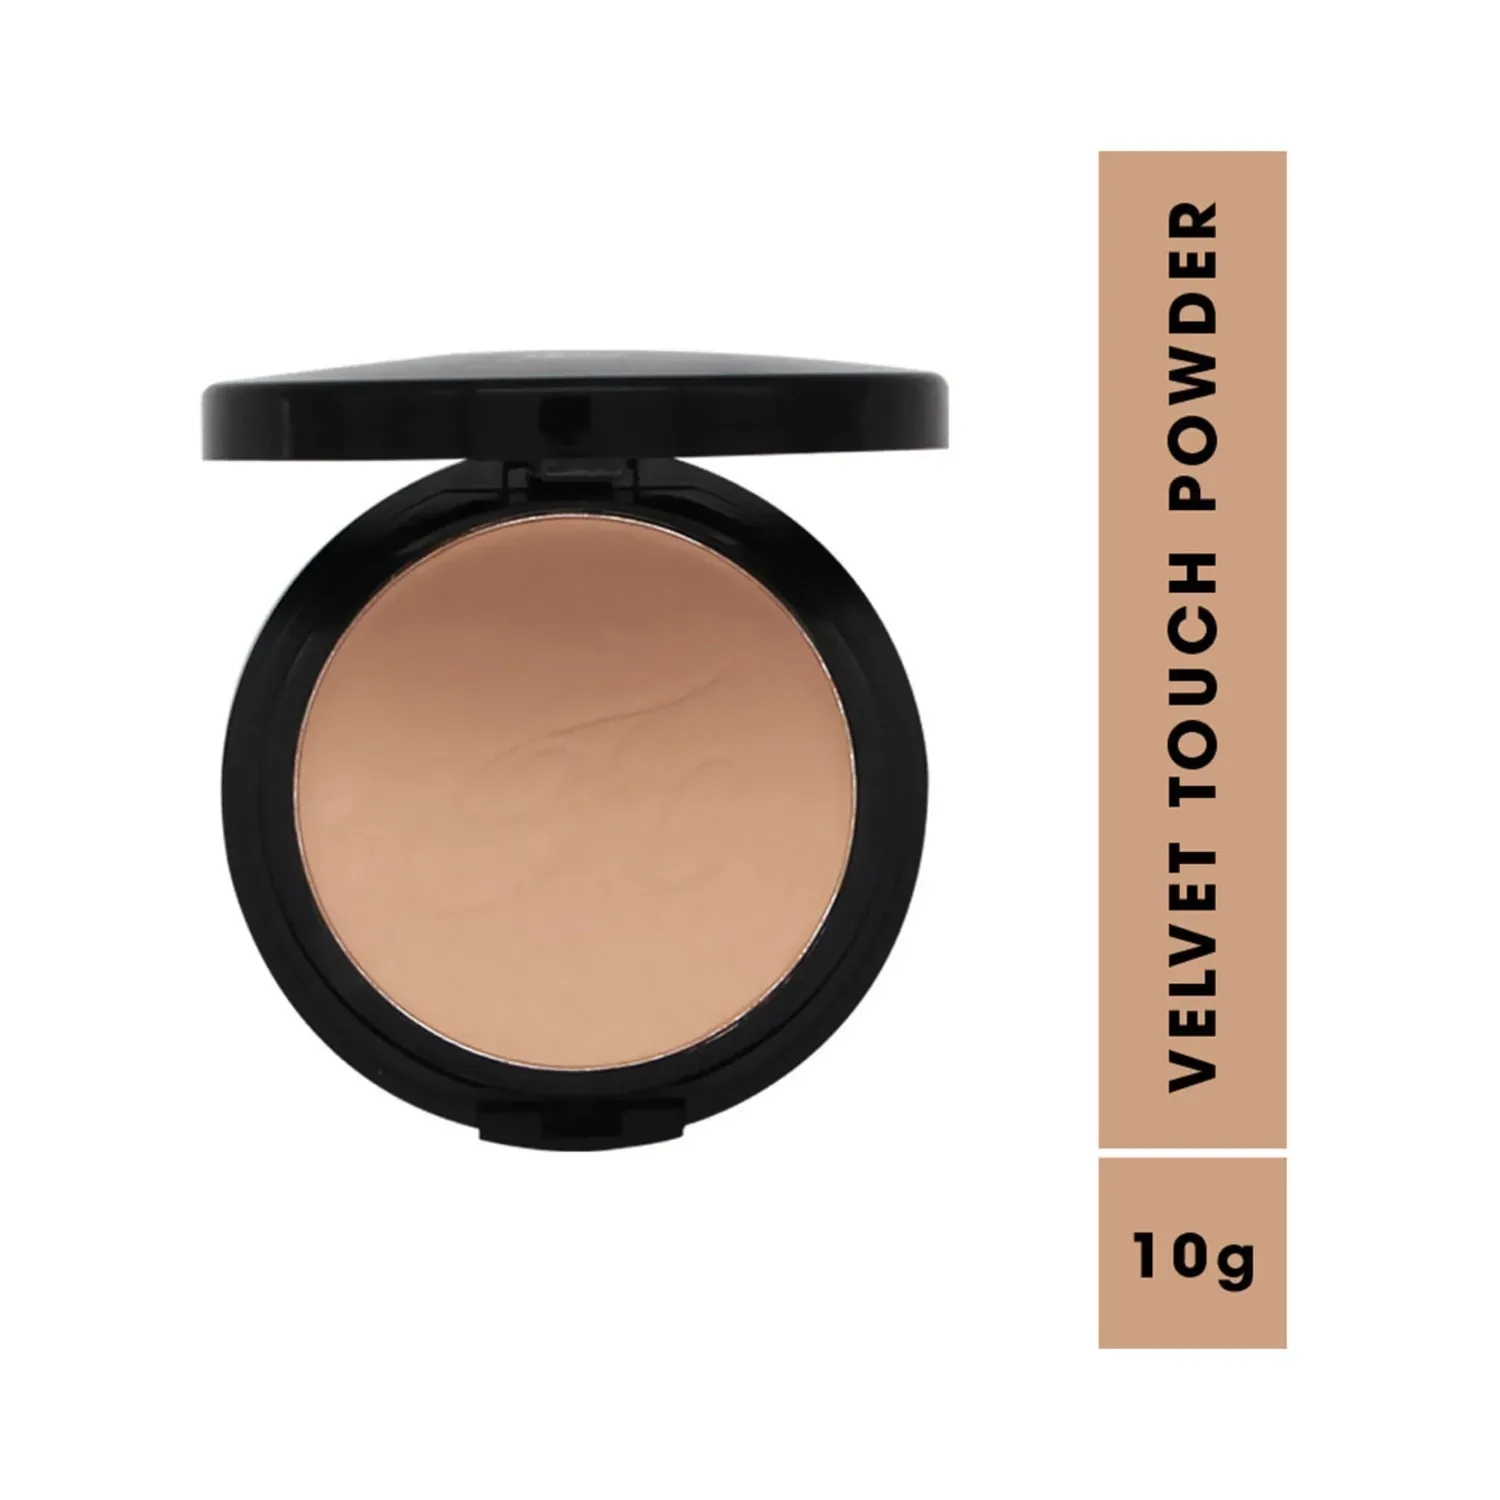 Fashion Colour Velvet Touch Compact Face Powder - 04 Shade (10g)